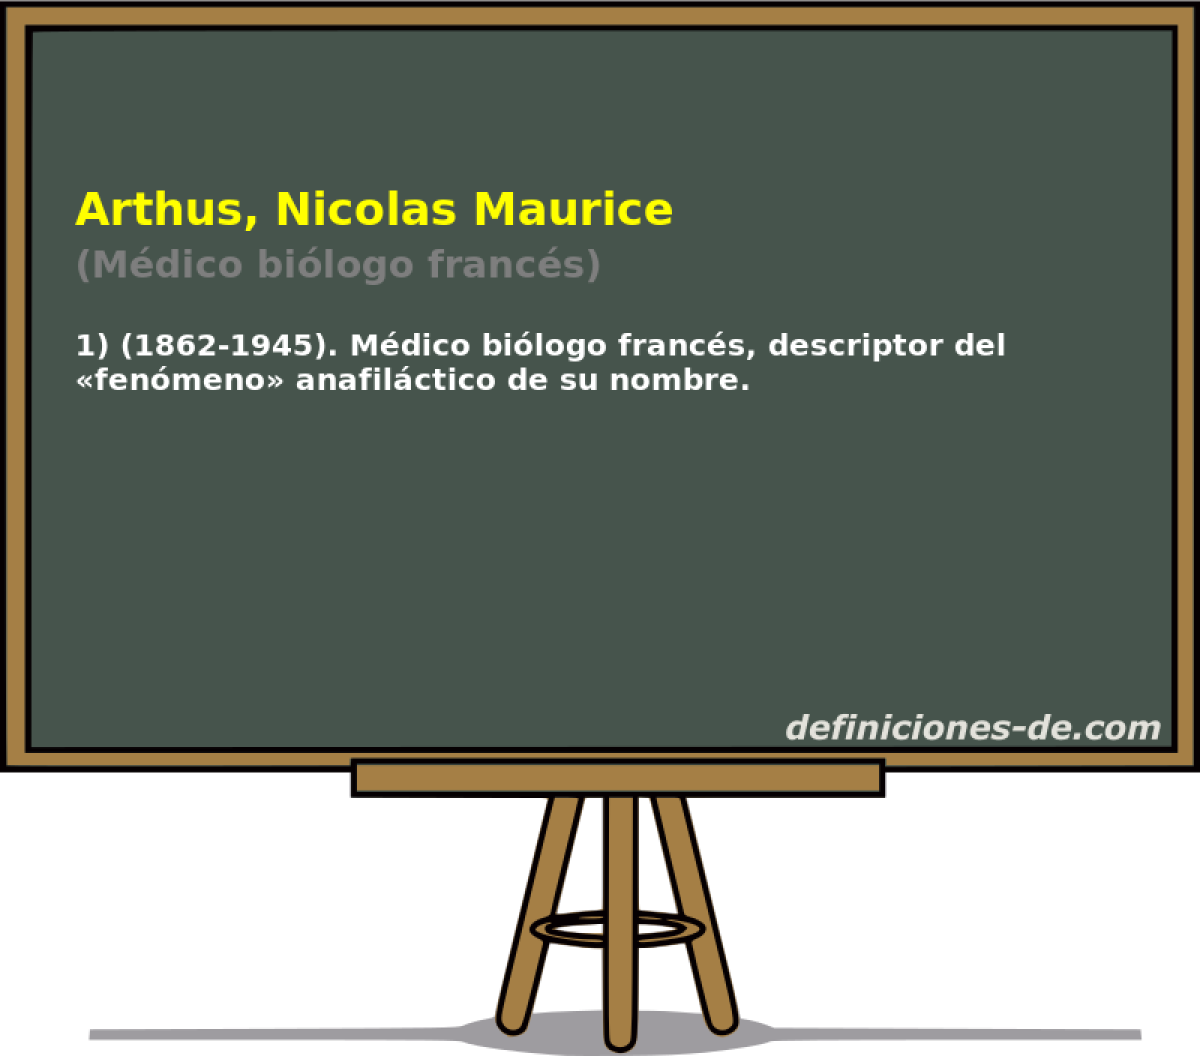 Arthus, Nicolas Maurice (Mdico bilogo francs)